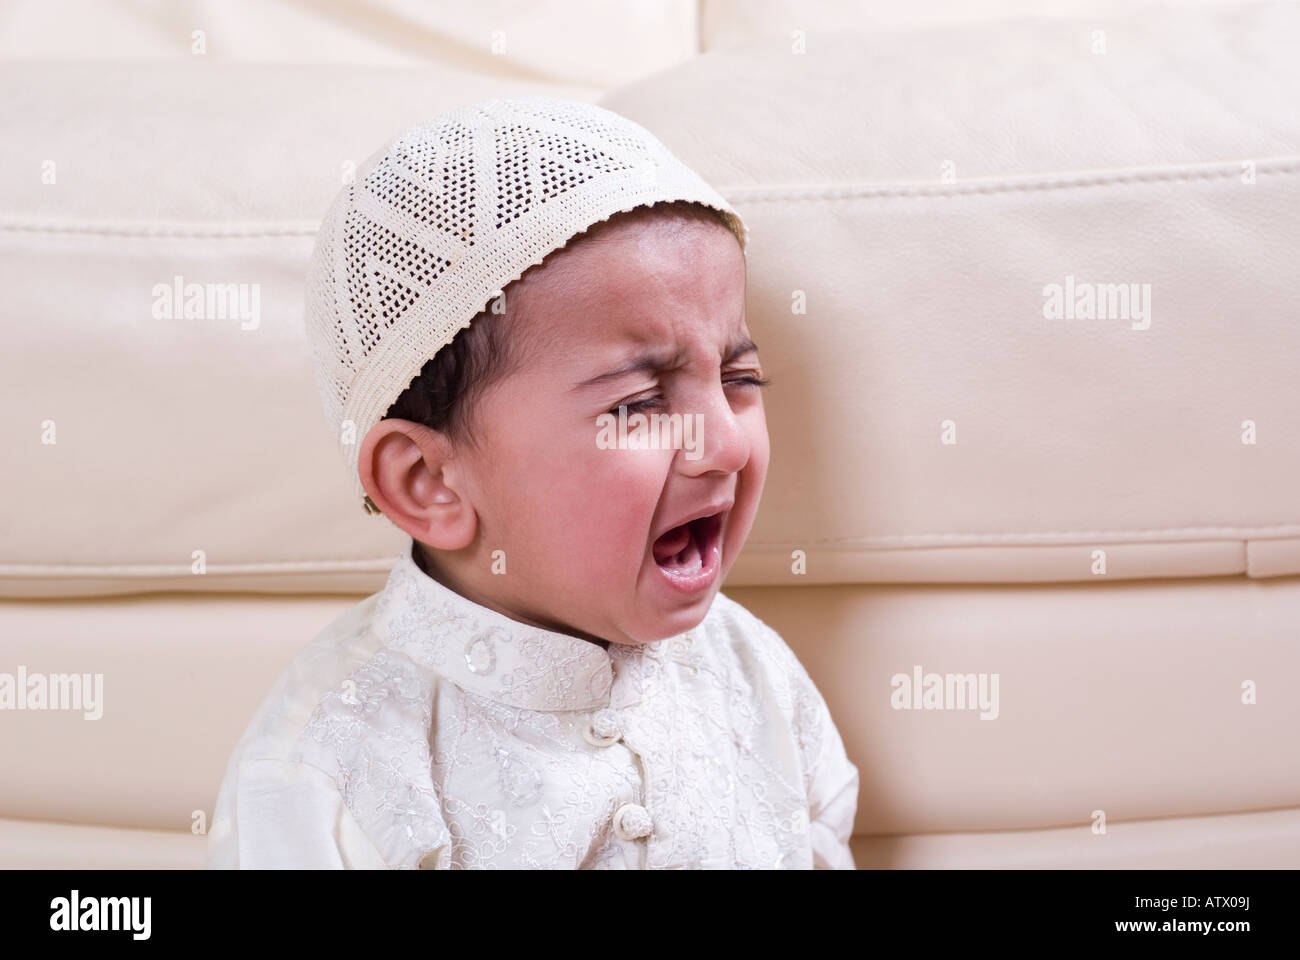 Muslim baby crying Stock Photo - Alamy